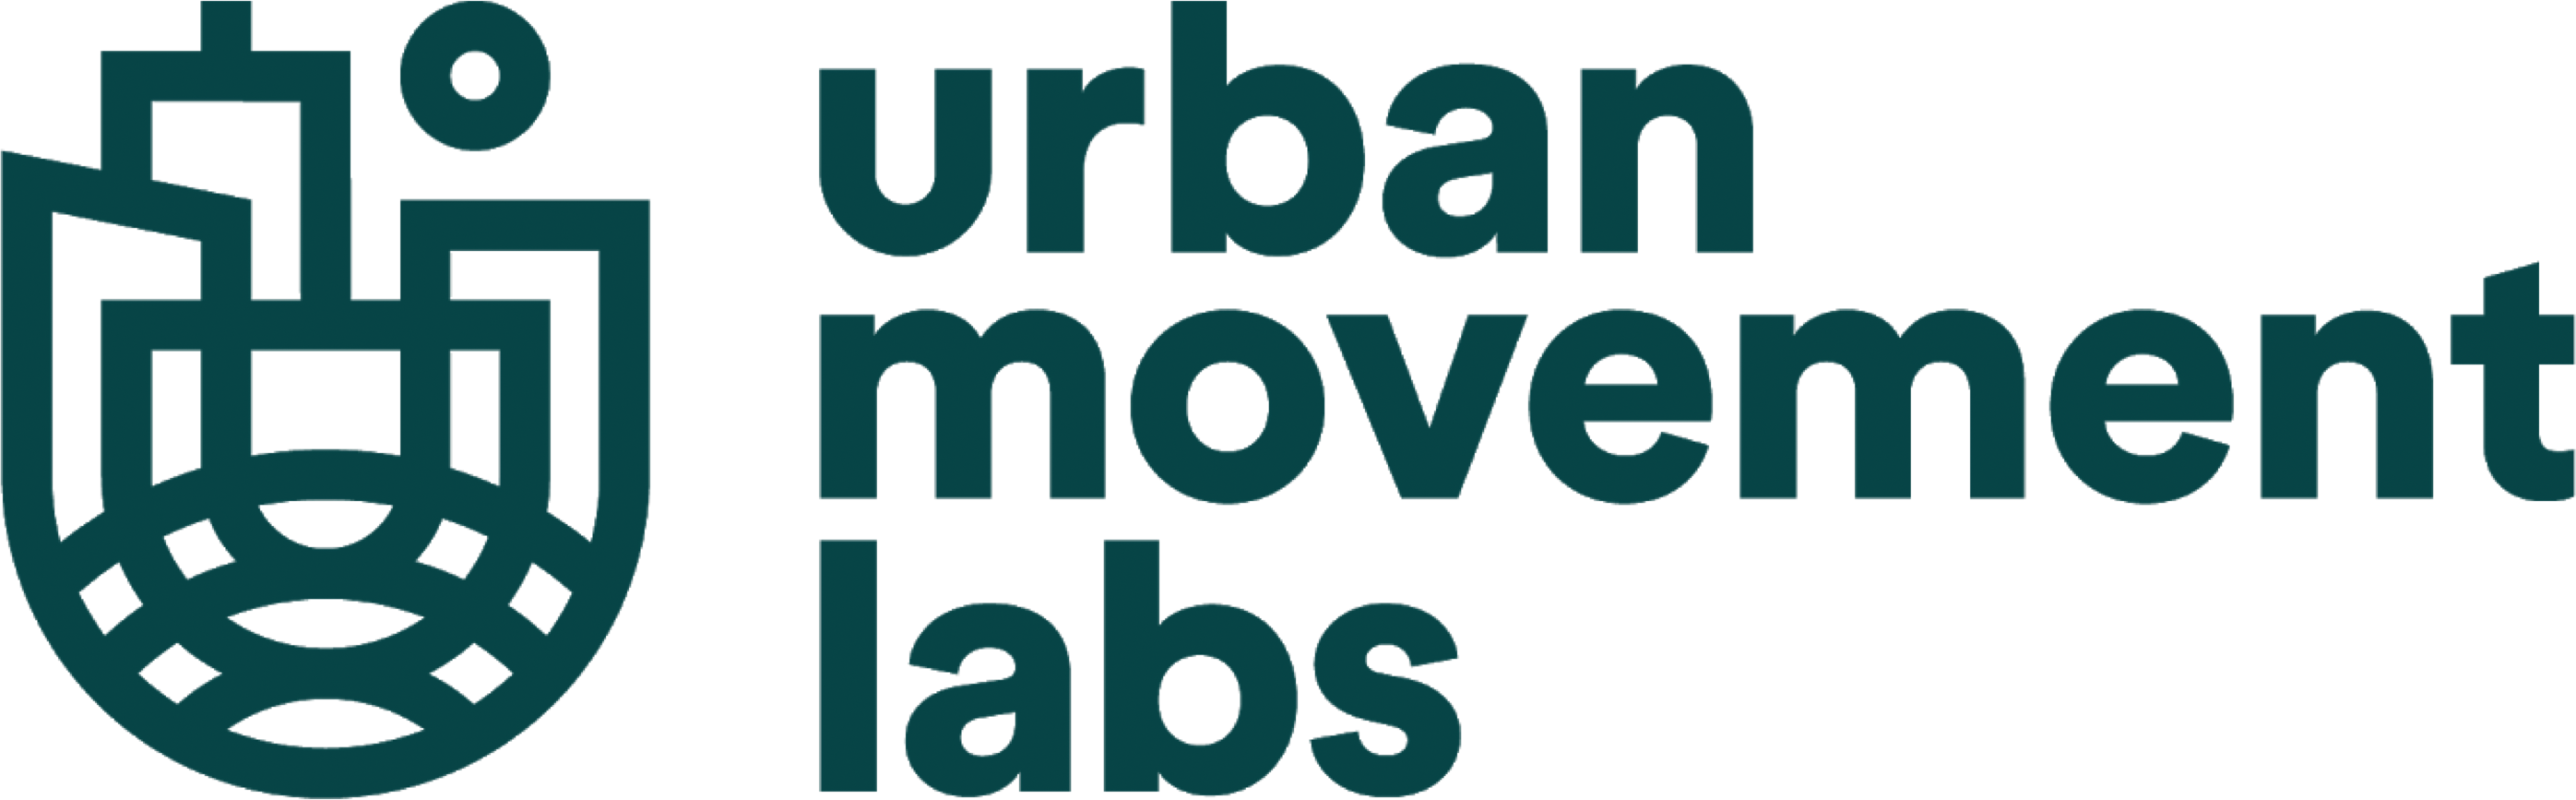 Urban Movement Lab Logo